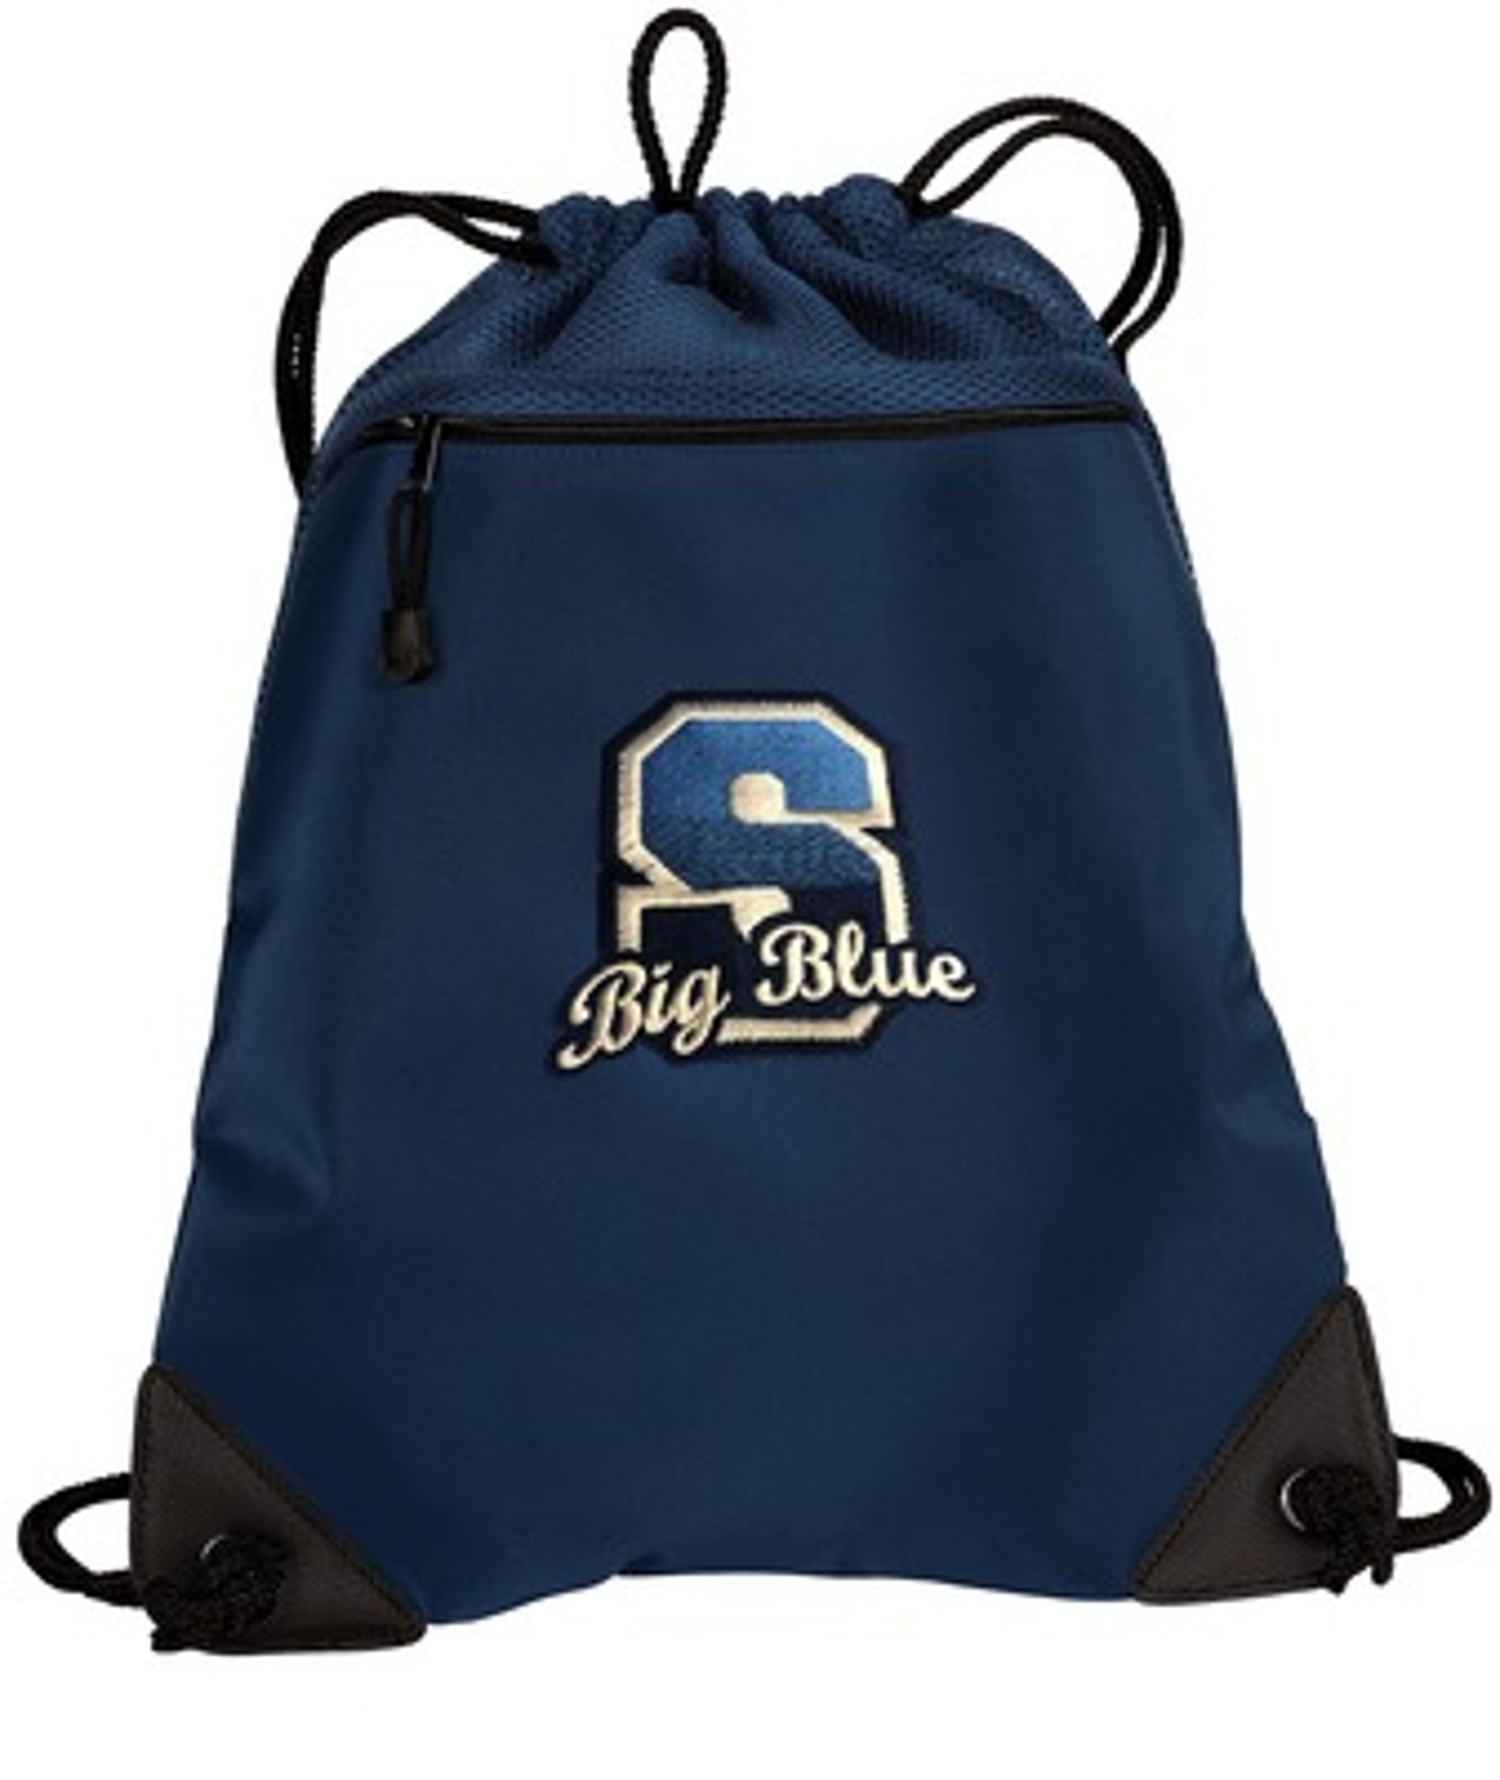 Big Blue Personalized Cinch Bag